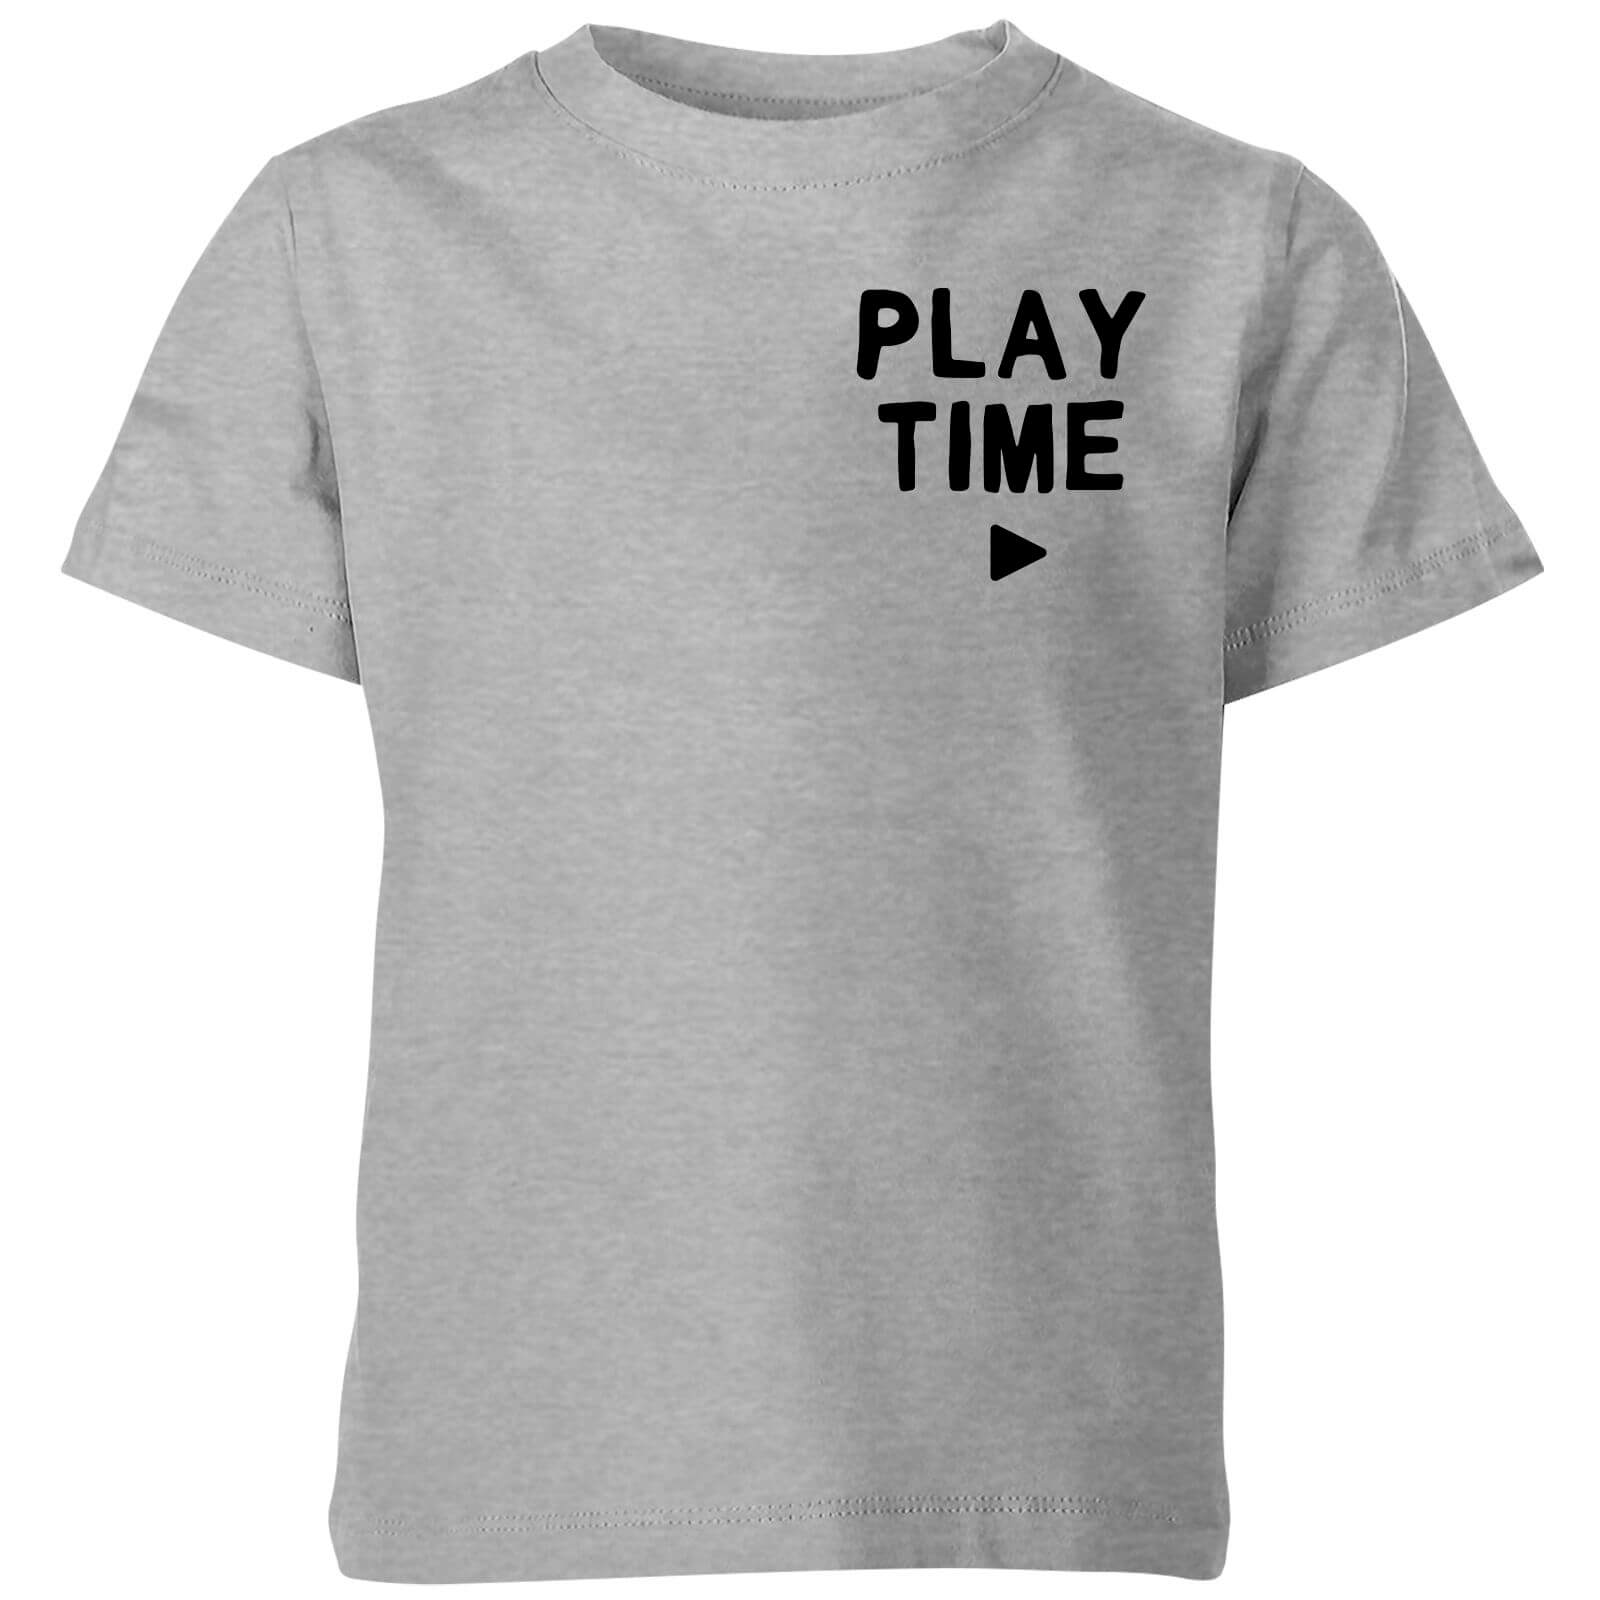 My Little Rascal Play Time Kids' T-Shirt - Grey - 3-4 Years - Grey